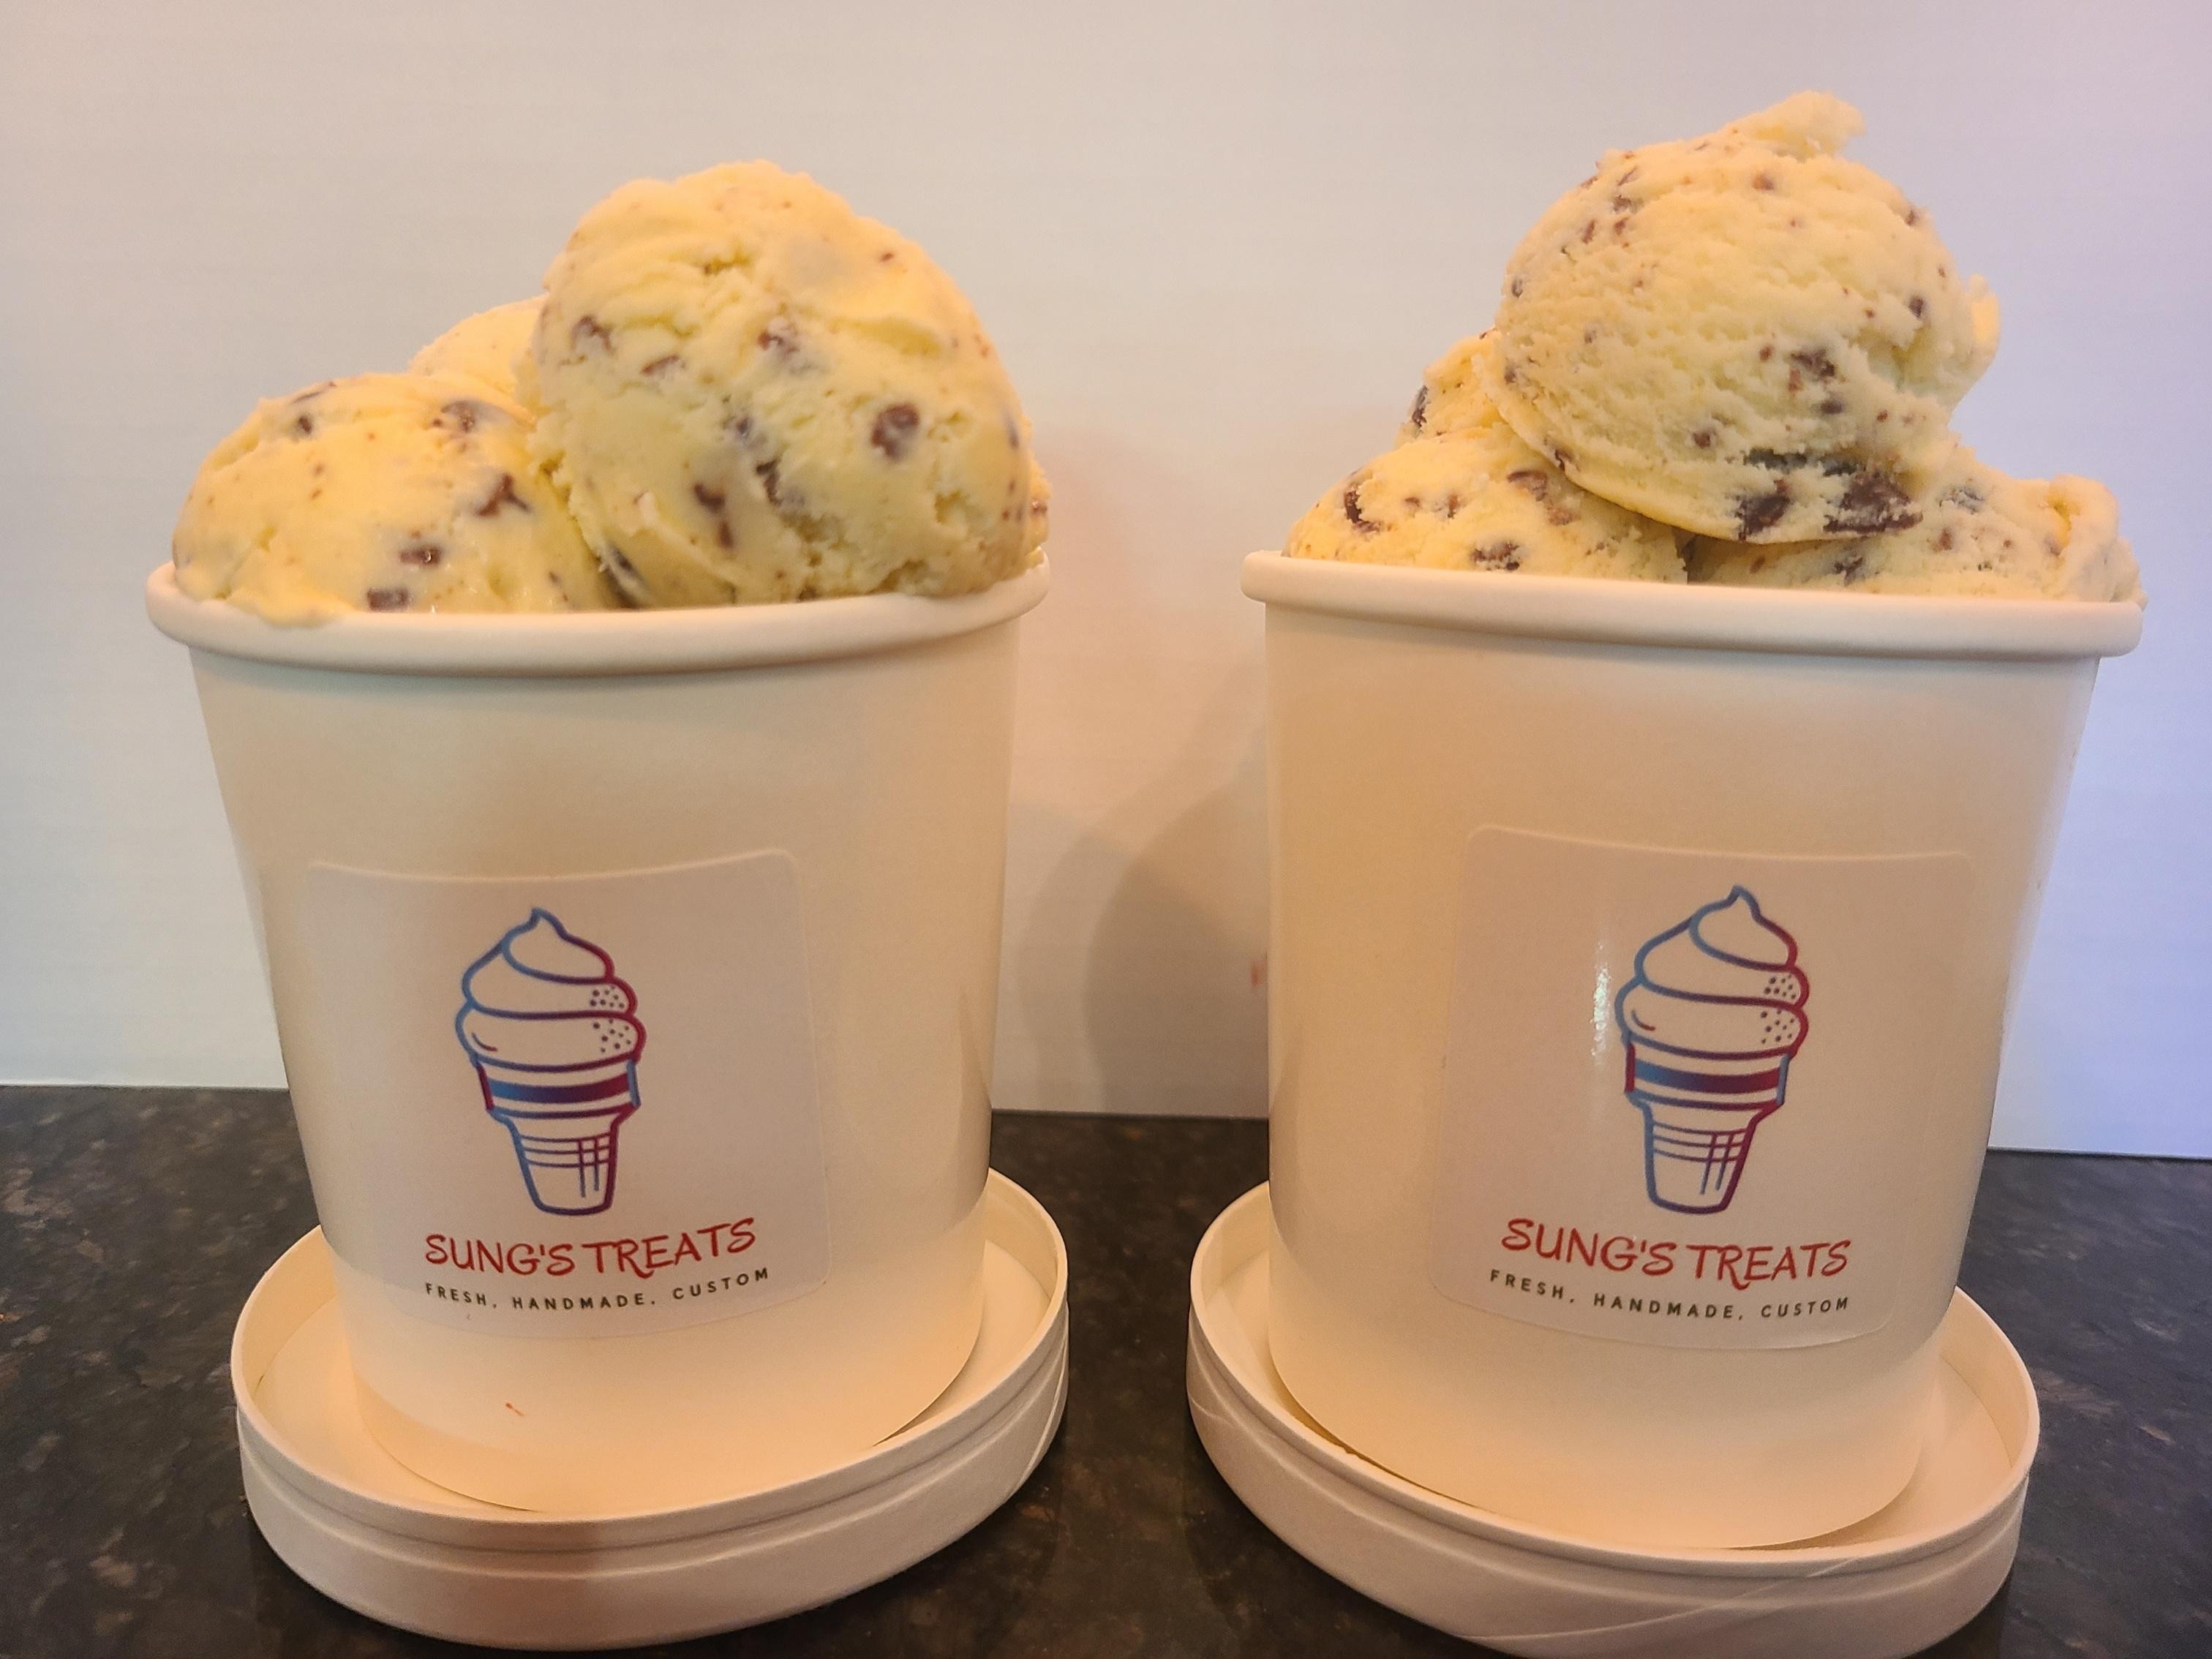 Sung's Treats Cookies and Cream Ice Cream